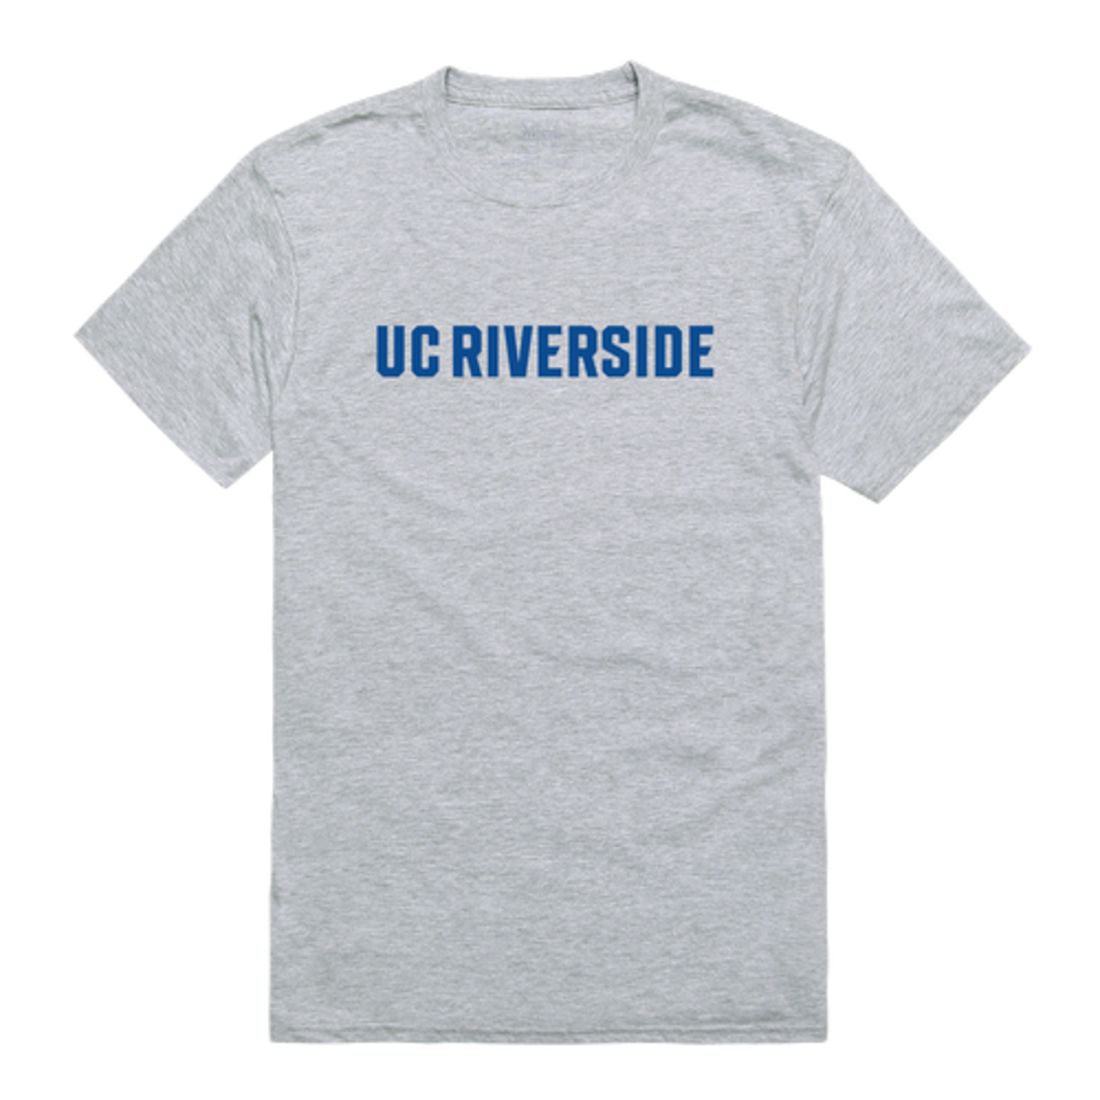 McKendree University Bearcats Game Day T-Shirt